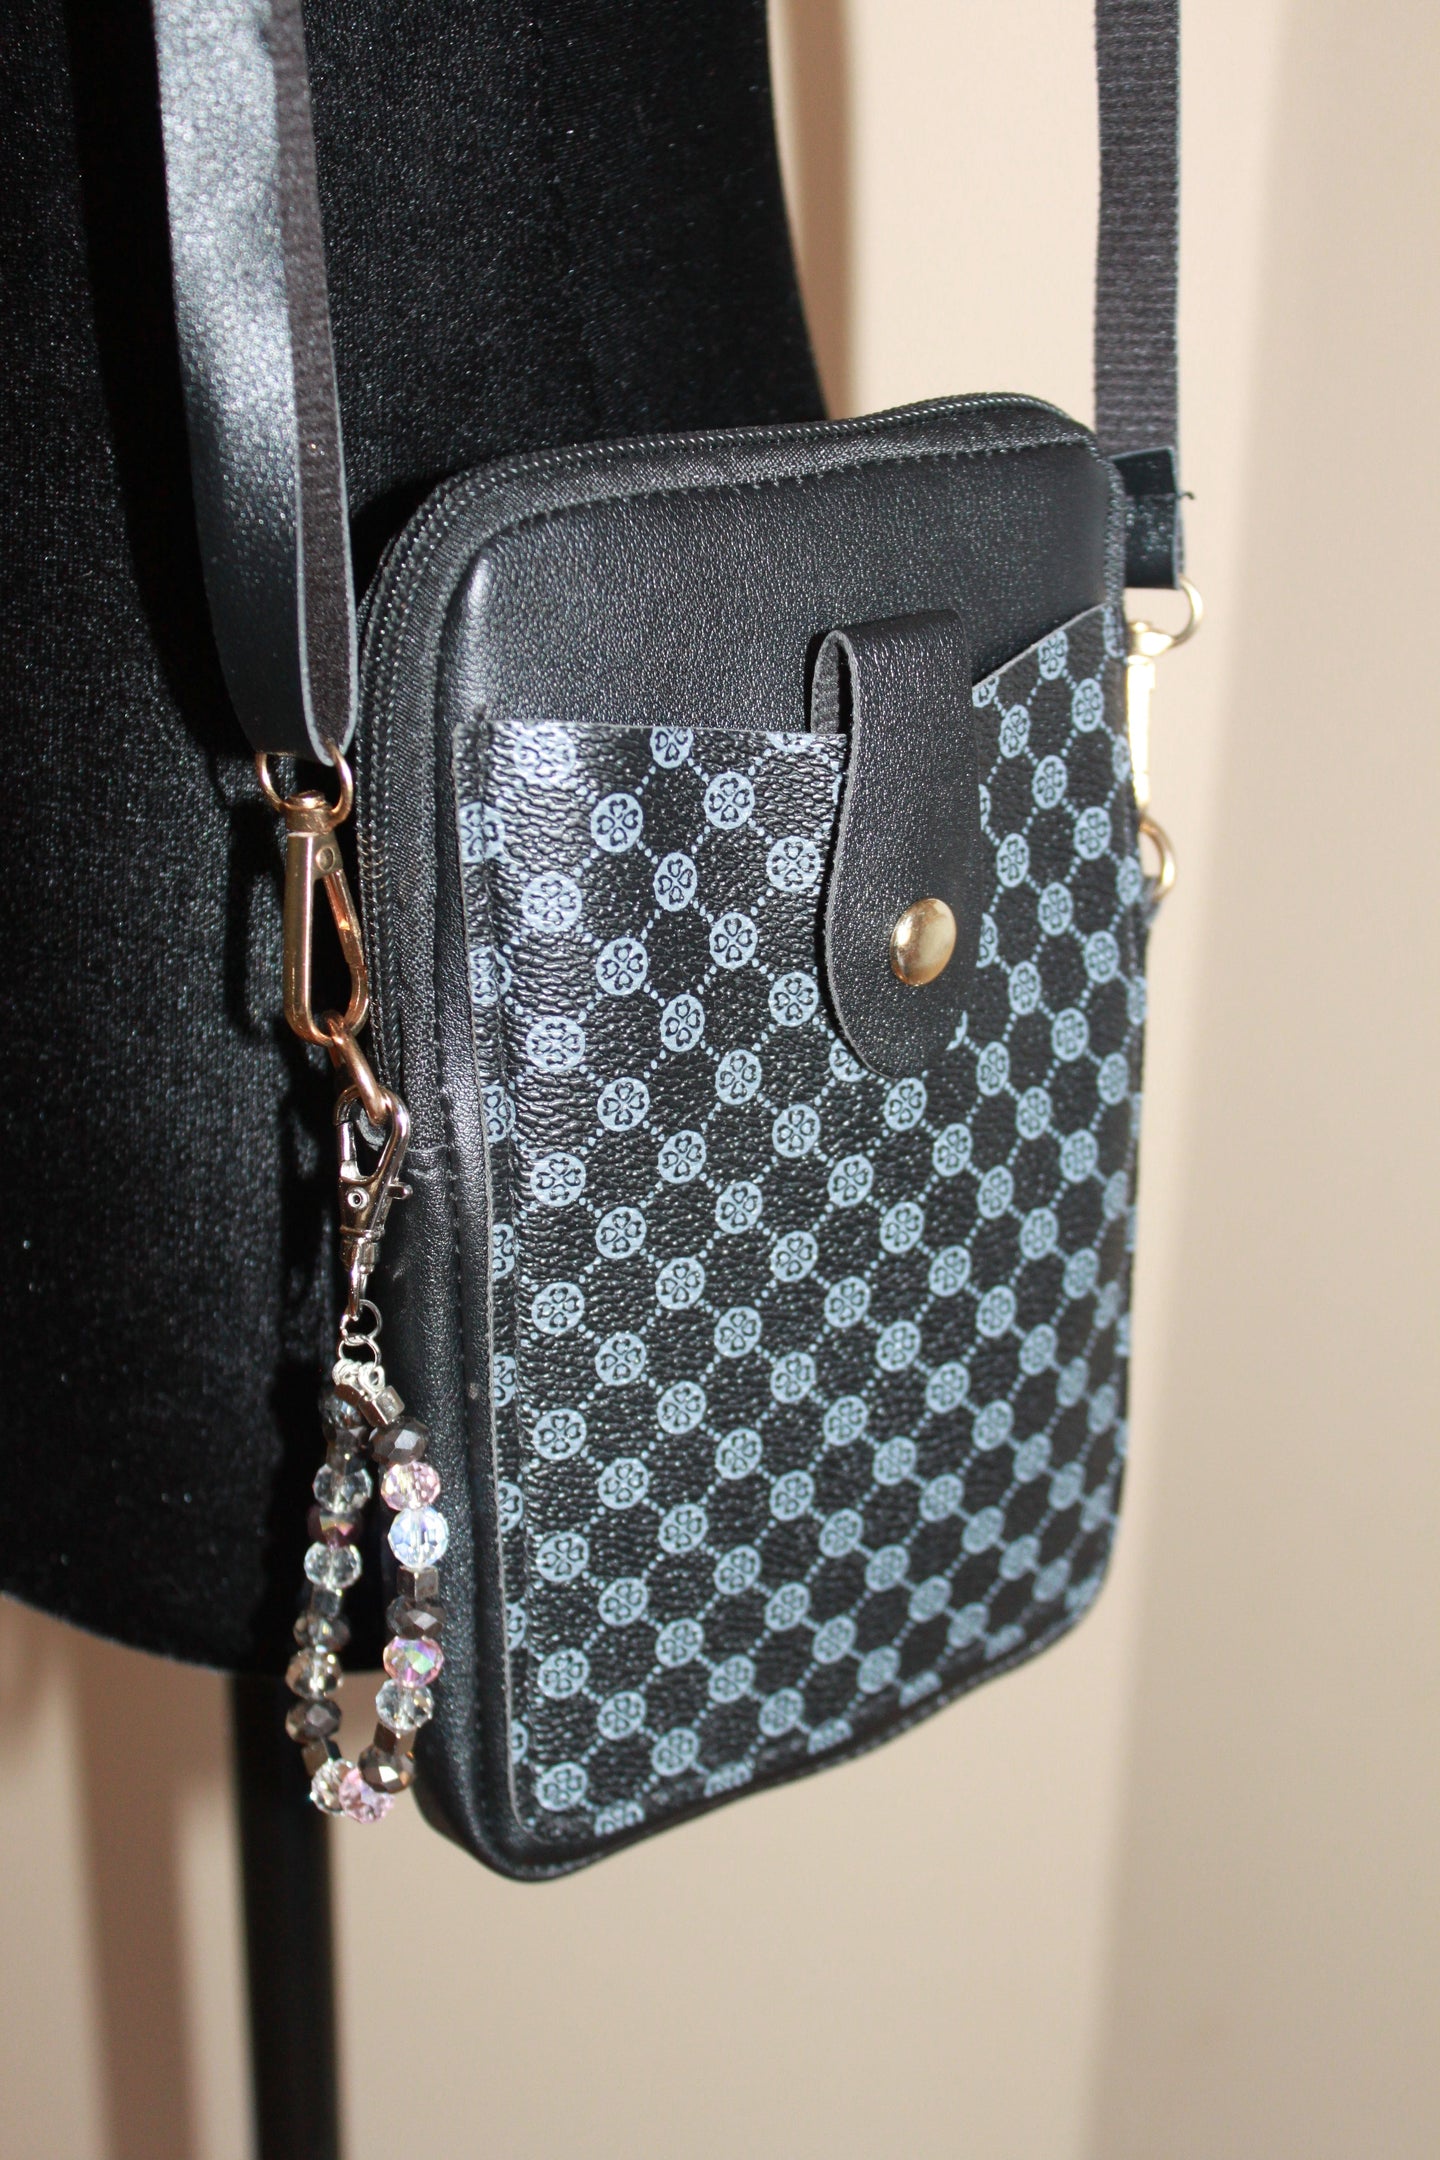 Crossbody Bag - Small black fashion handbag with adjustable strap and pretty bag charm HB054